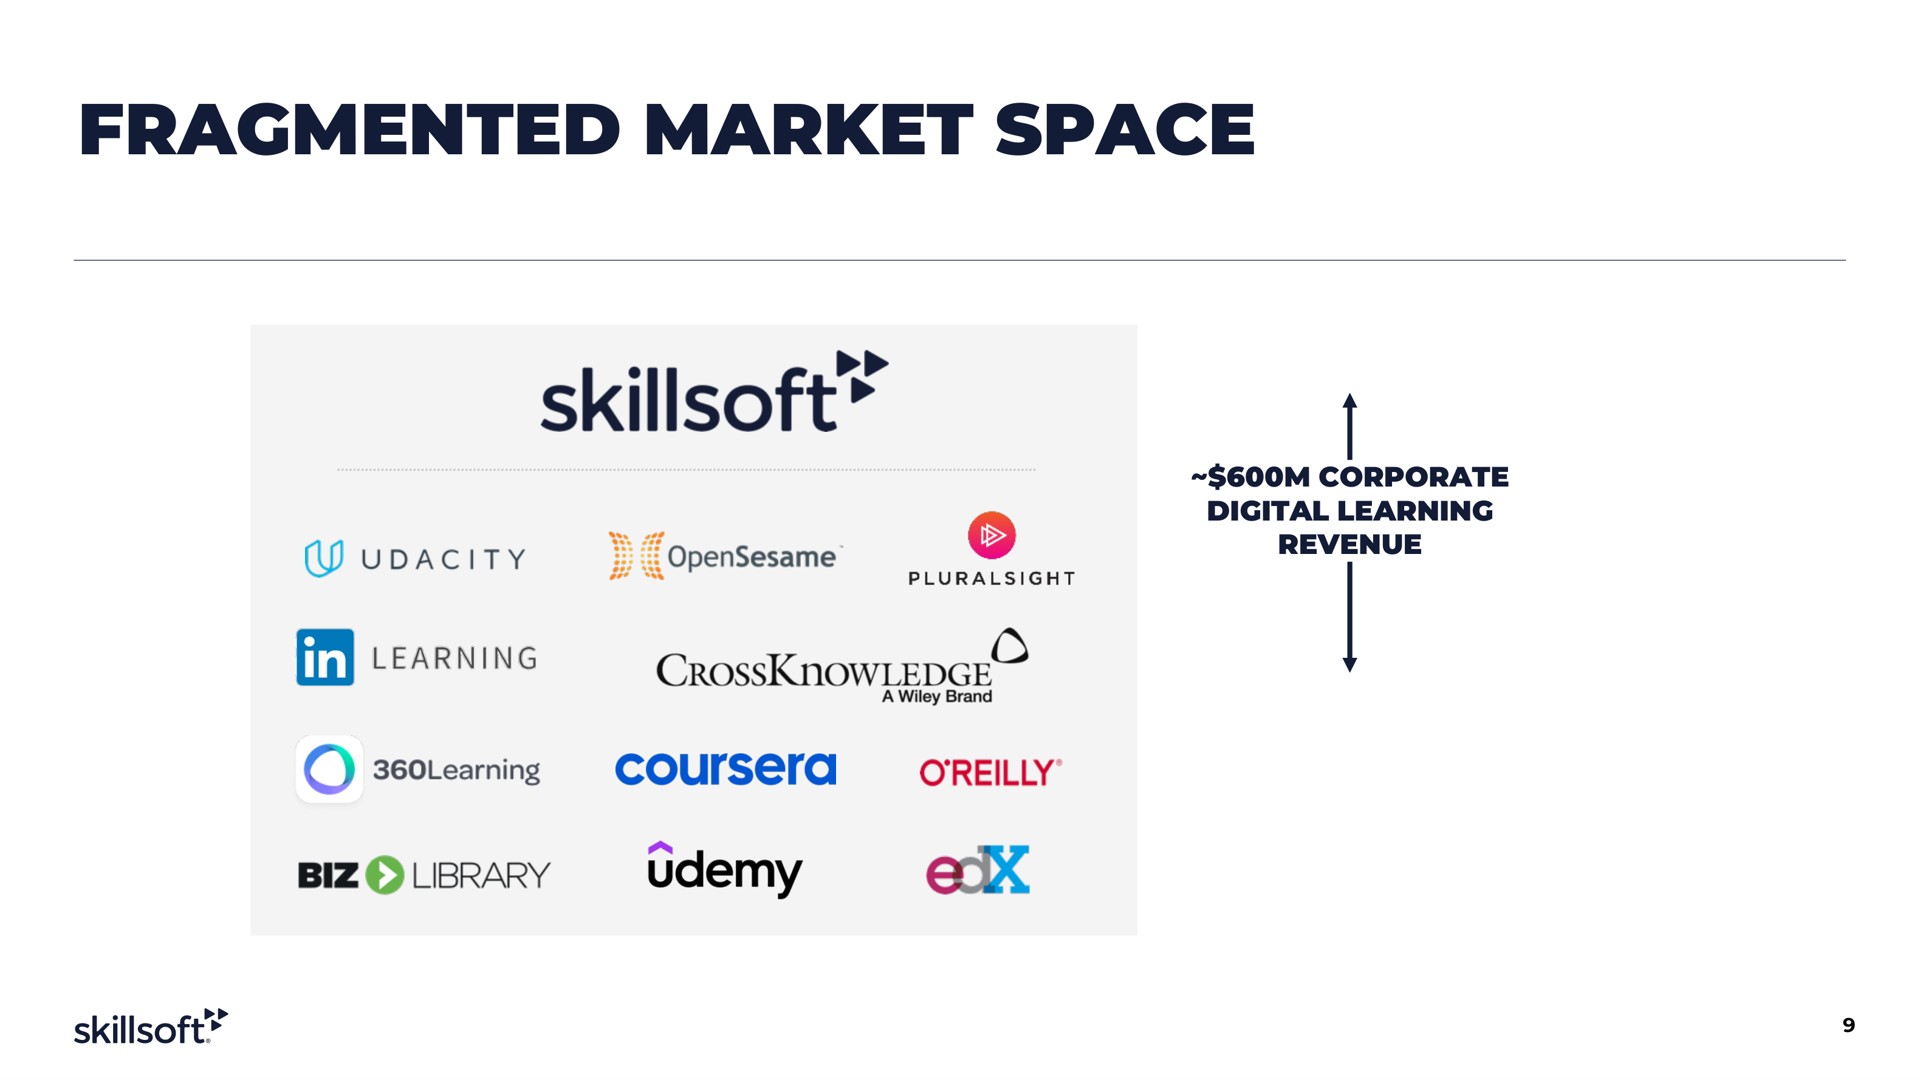 fragmented market space i learning | Skillsoft